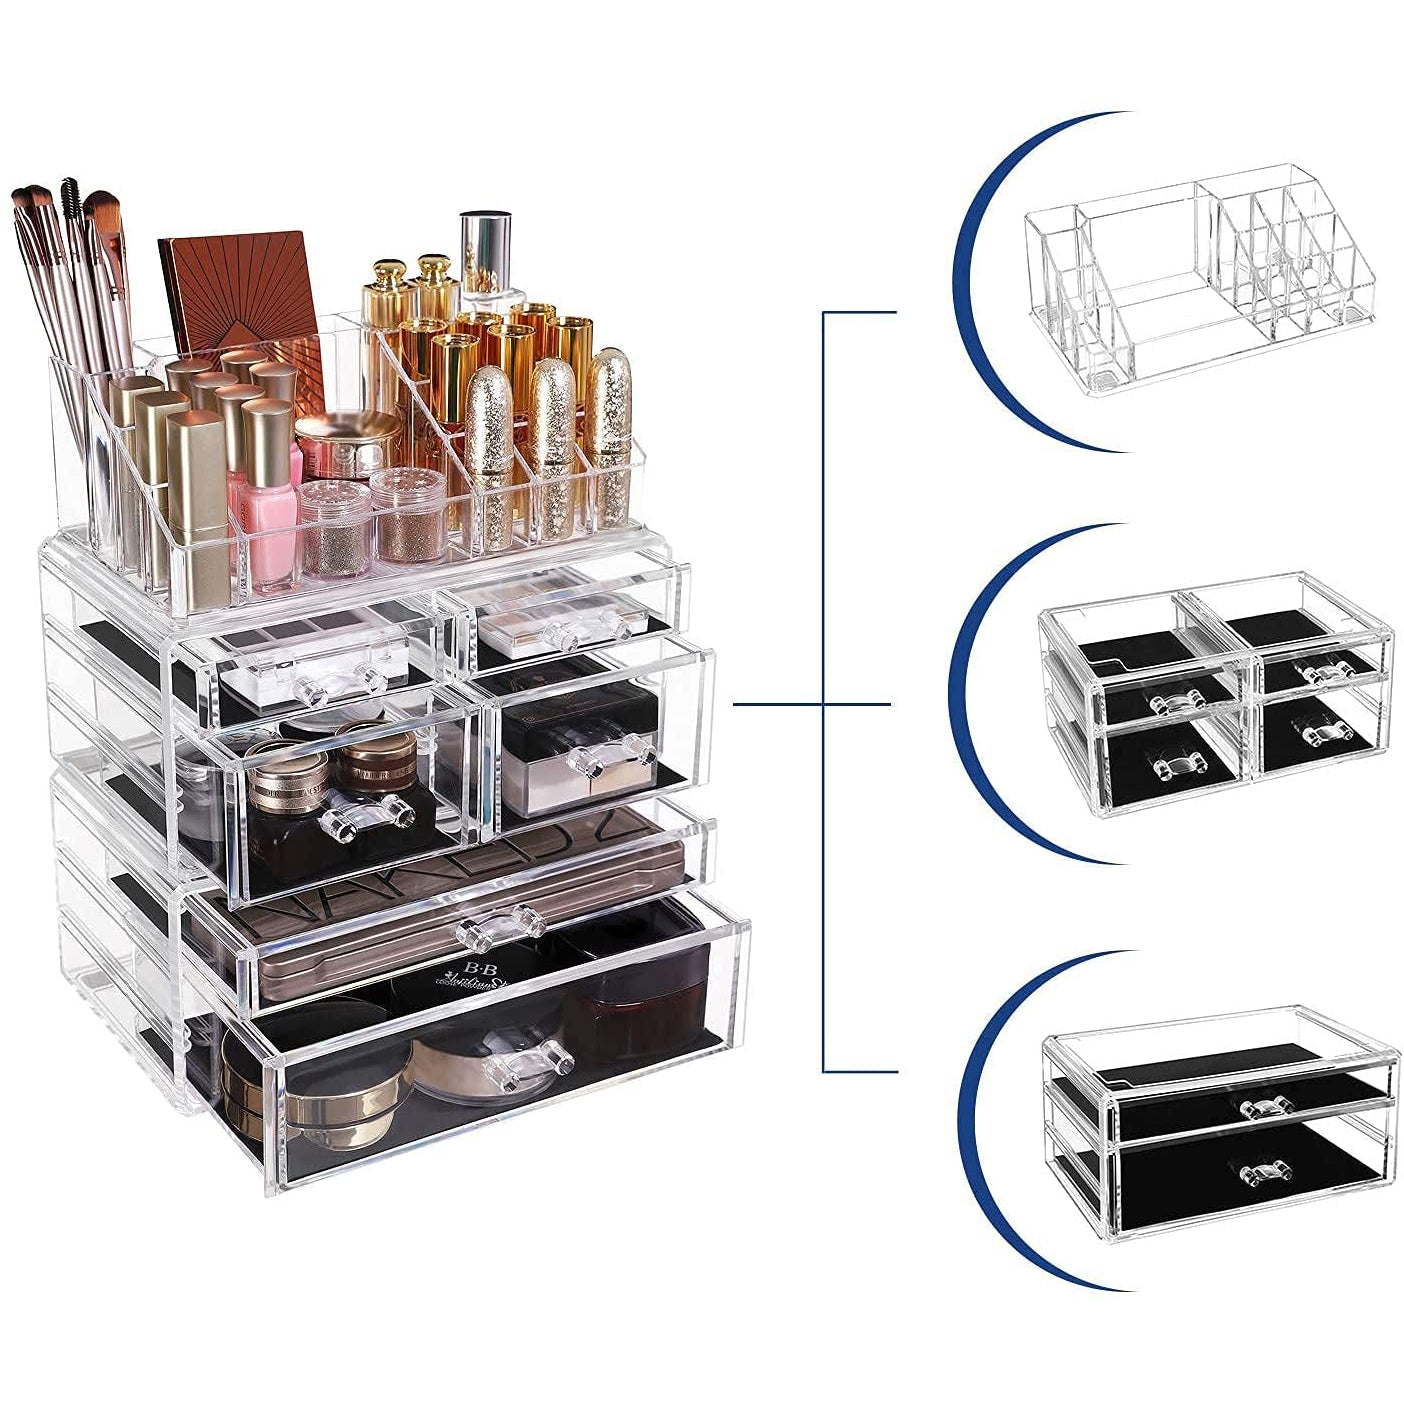 Nancy's Bushy Lake Make-Up Storage - Cosmetics Organizer - Make-Up Box - Acrylic - 2 Parts - 6 Drawers - Transparent/White - 24 x 30 x 13.5 cm